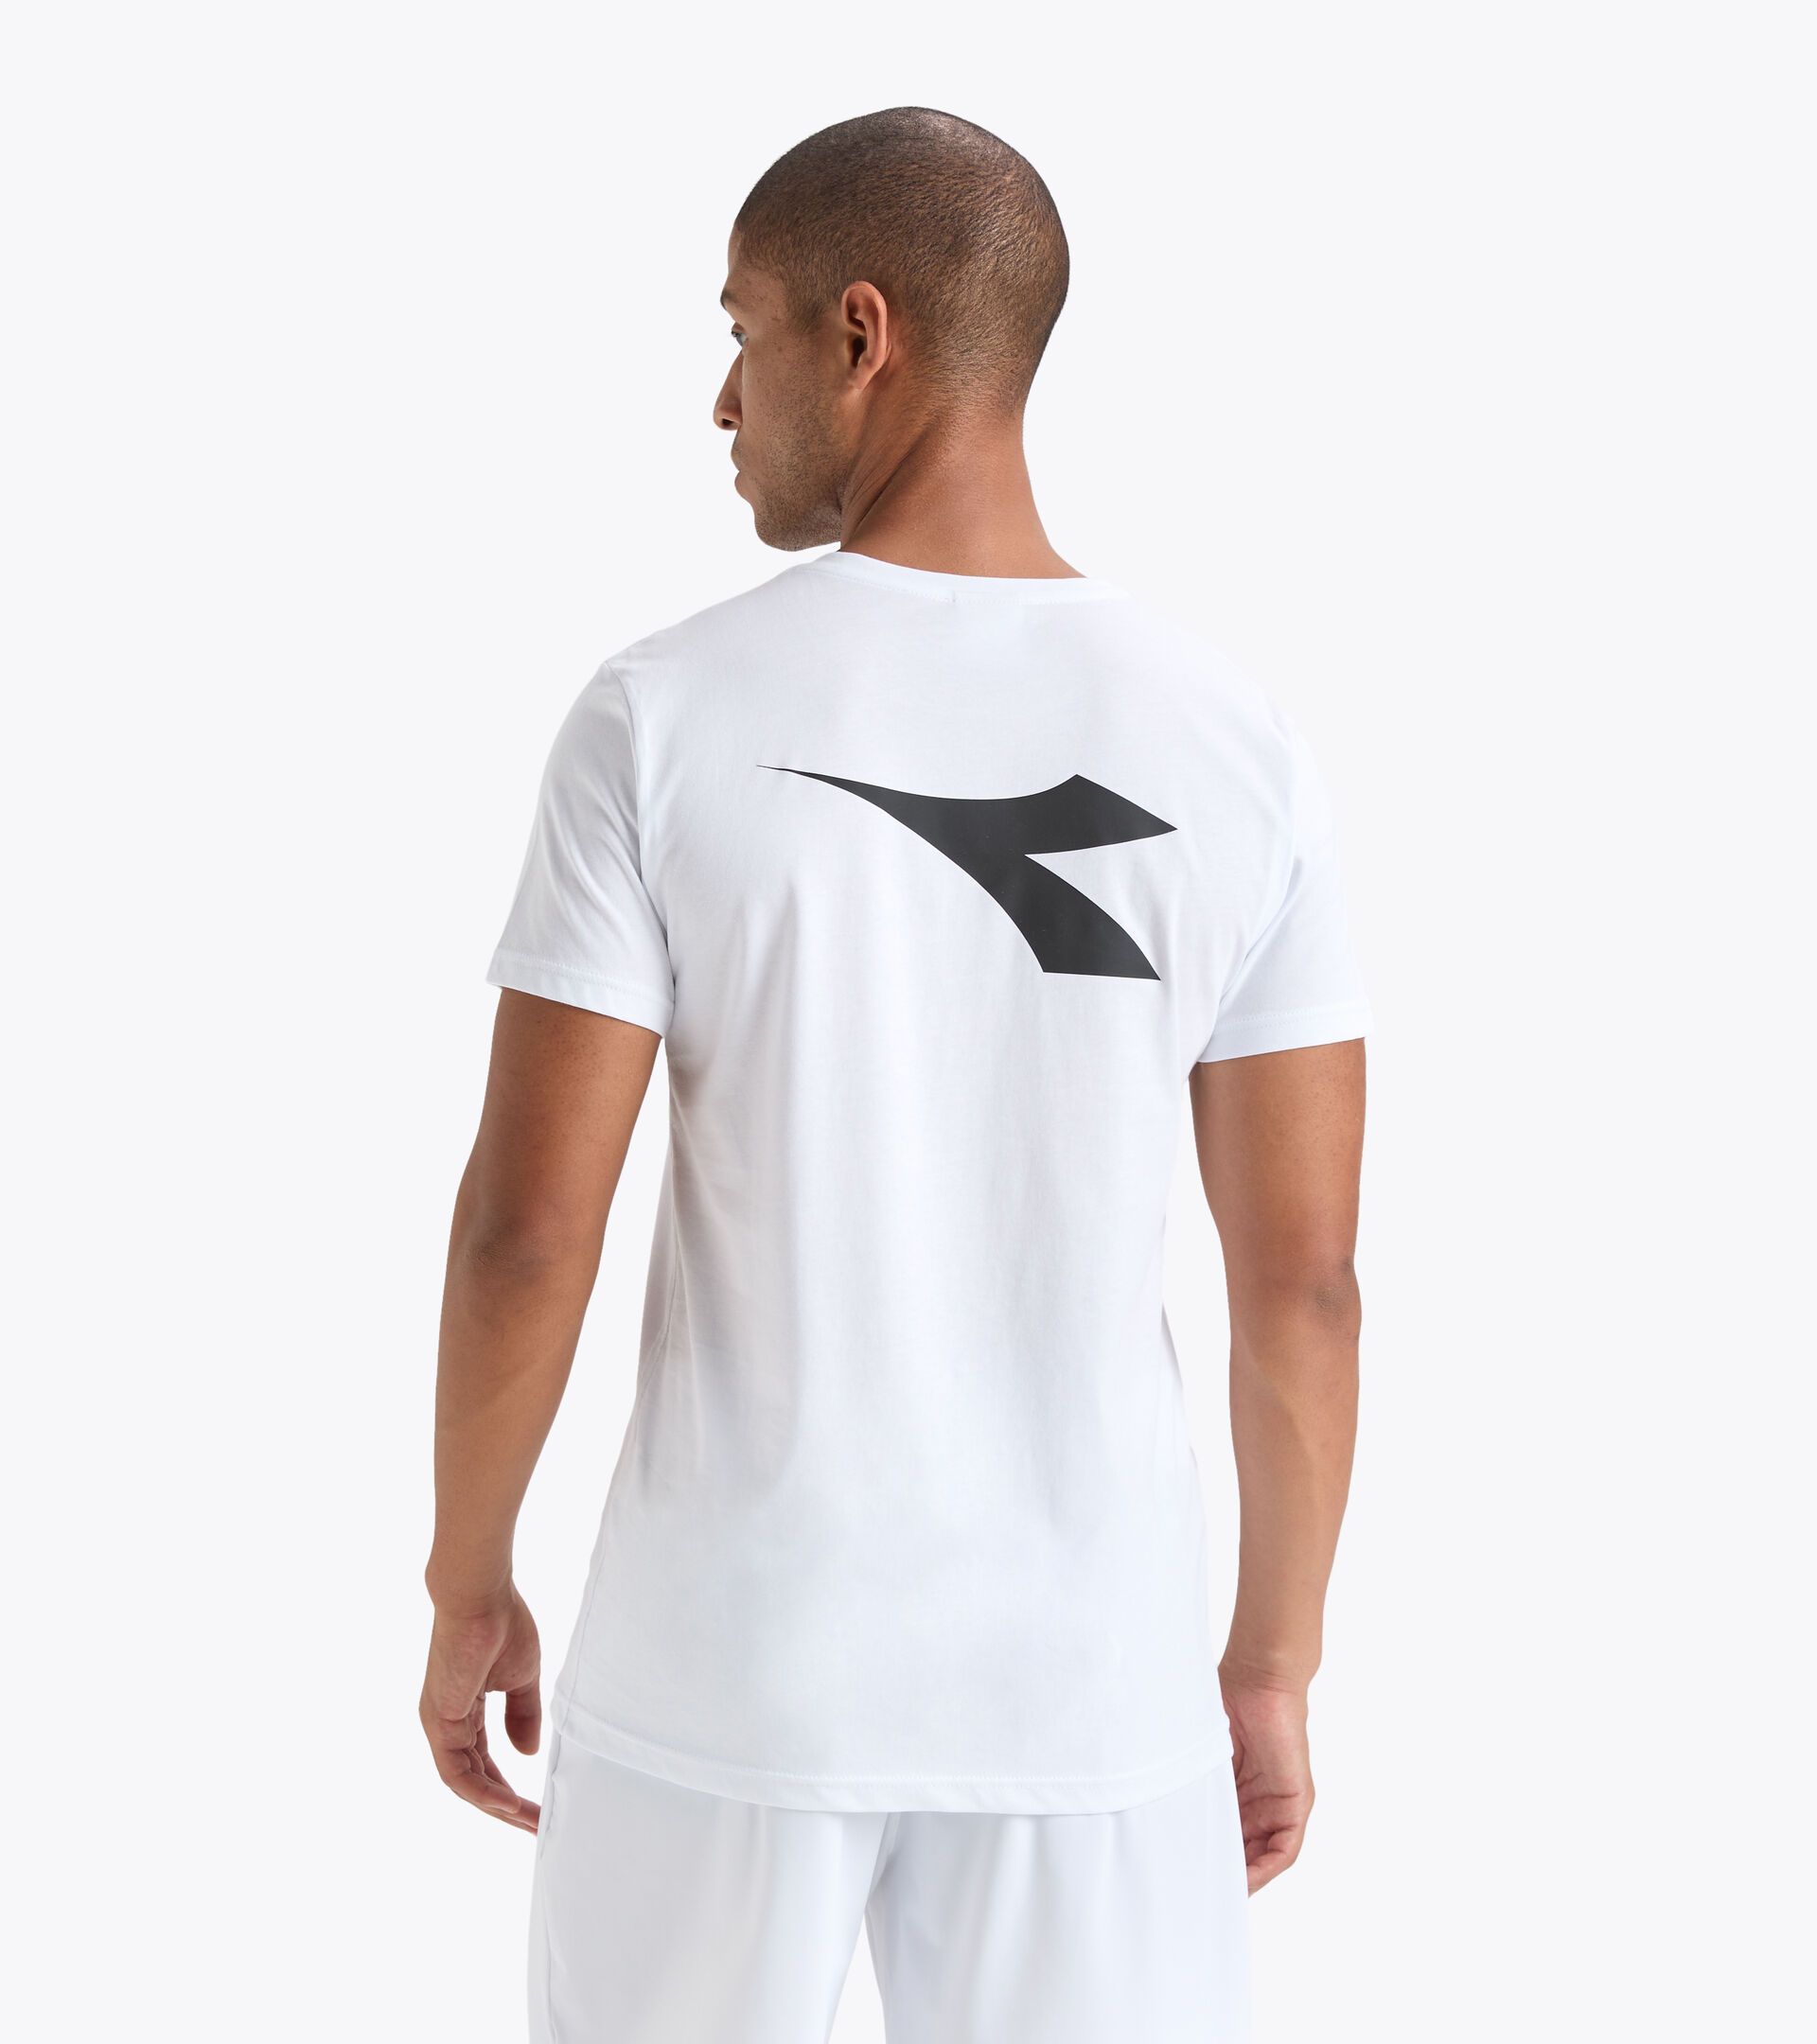 Representative t-shirt - Italy National Volleyball Team  T-SHIRT RAPPRESENTANZA BV ITALIA OPTICAL WHITE - Diadora